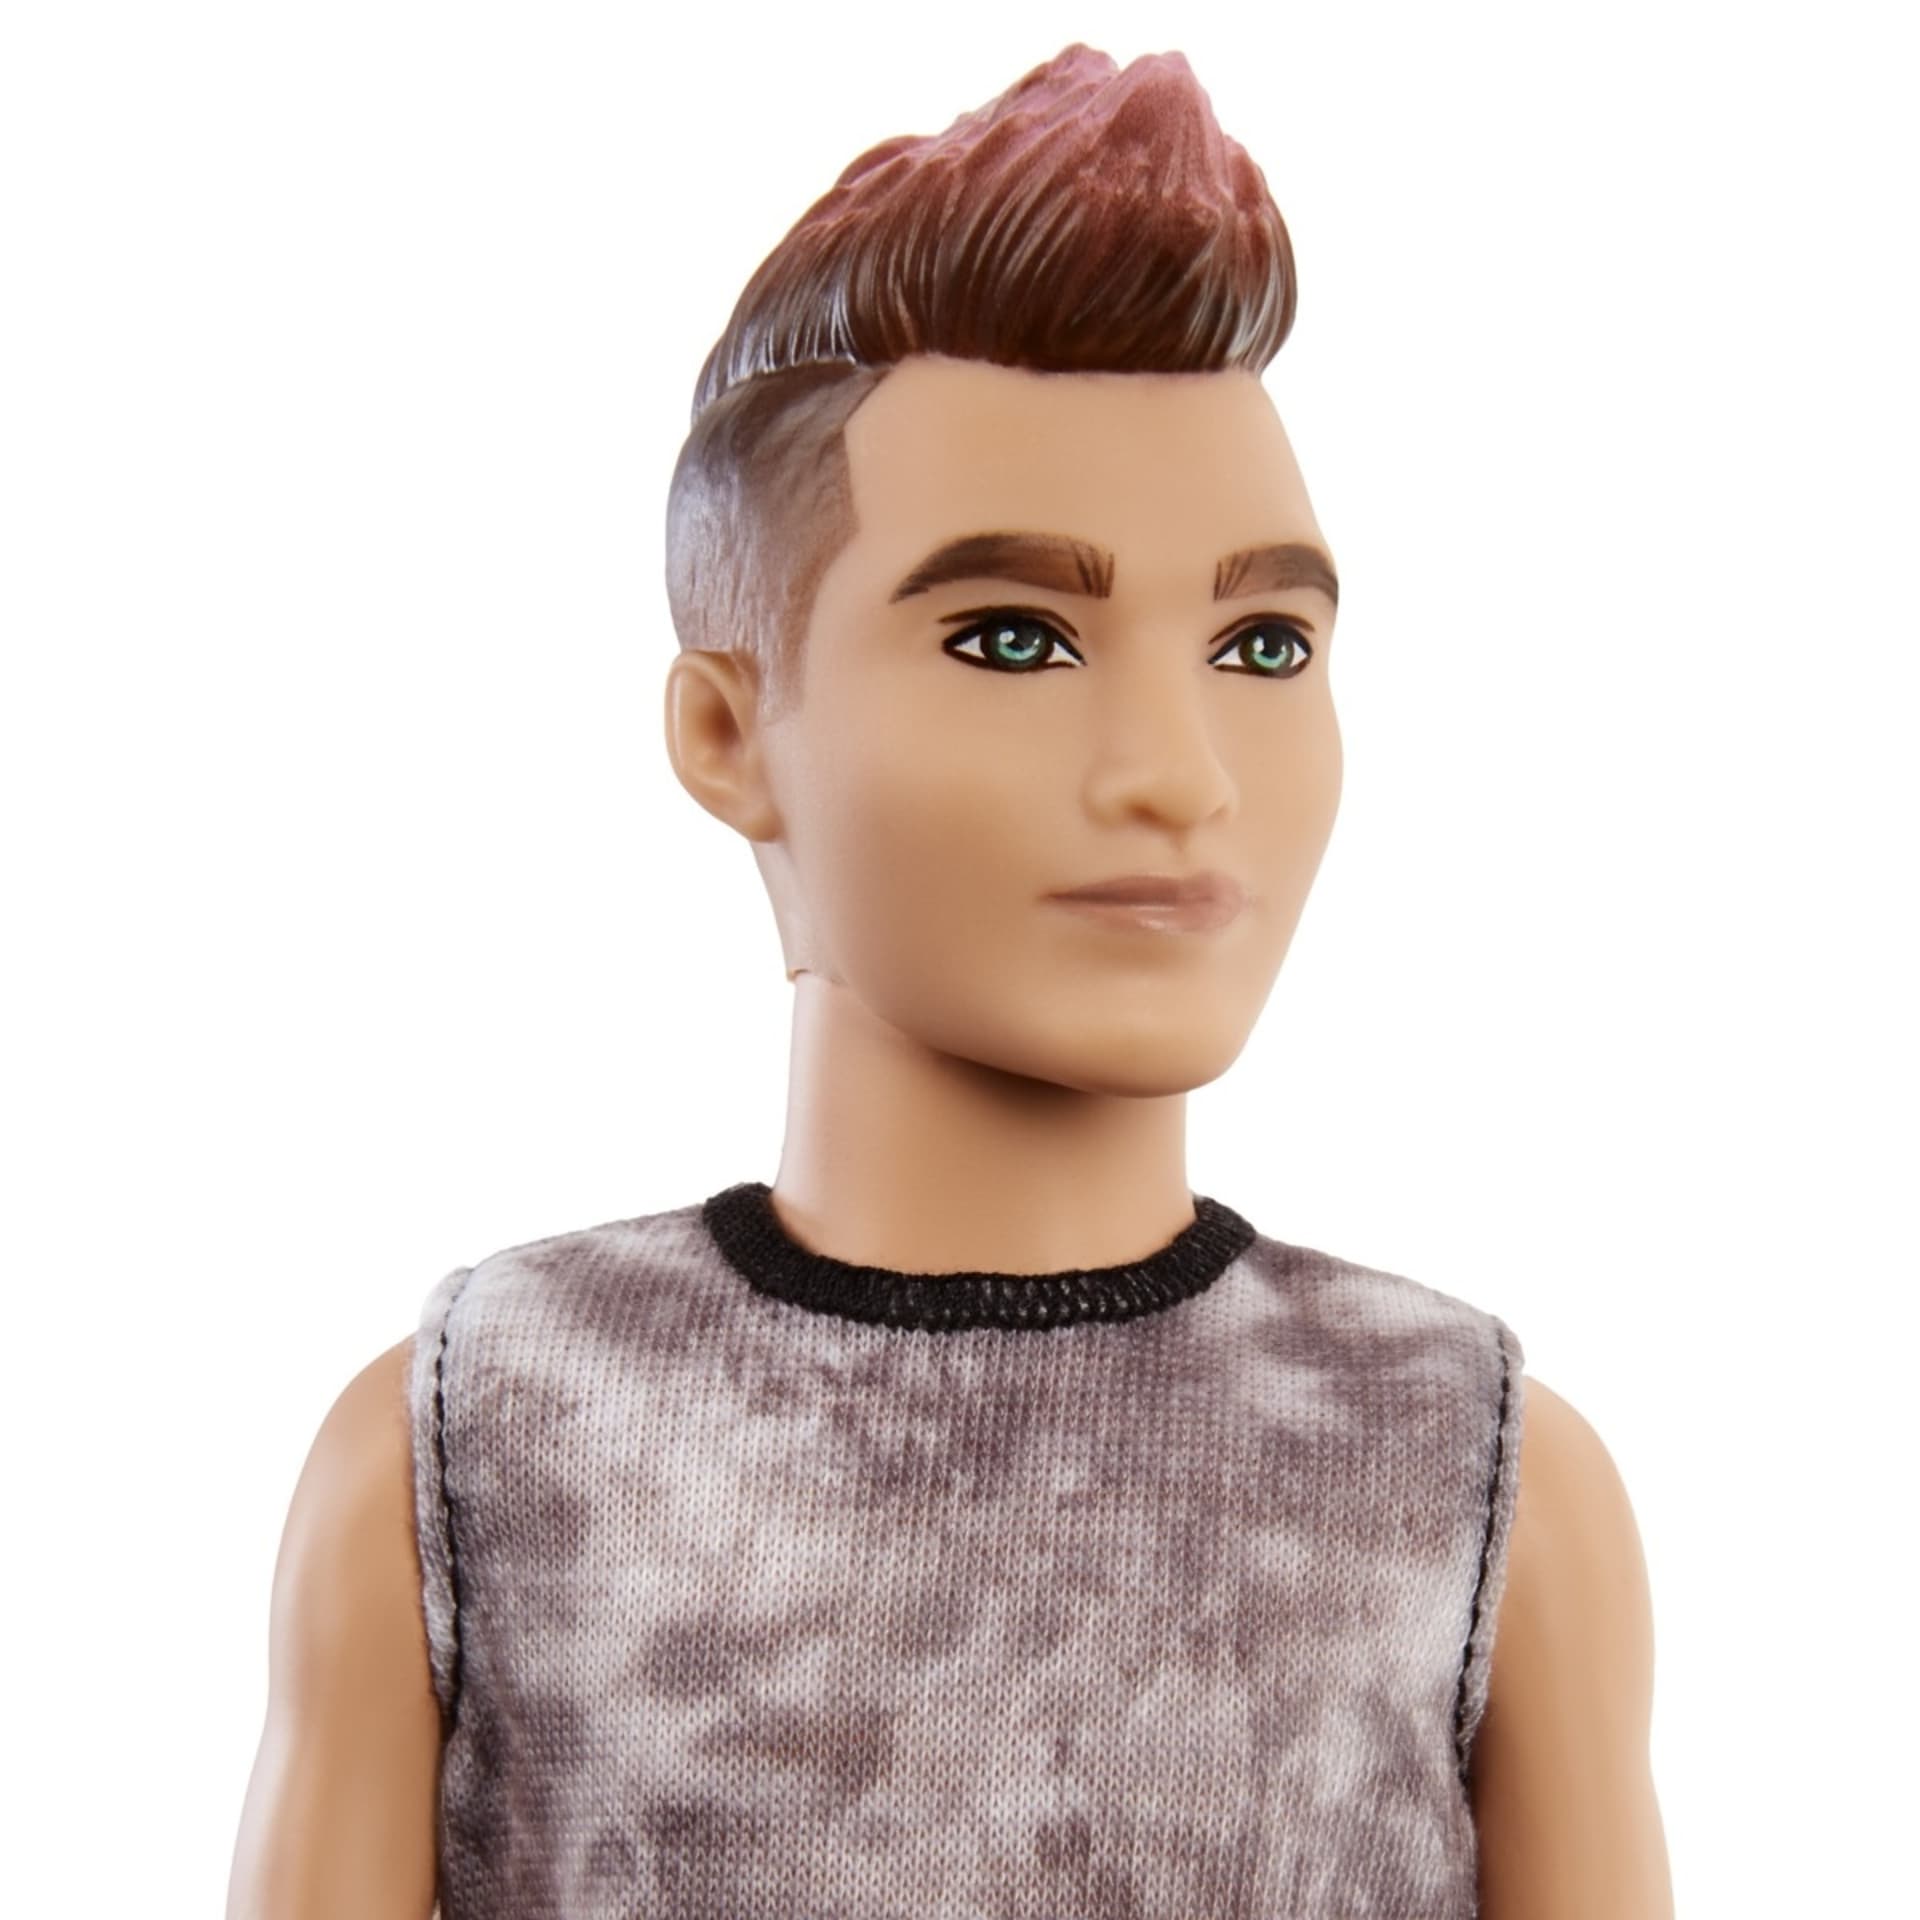 Barbie Fashionista Ken Doll Assorted Kmart